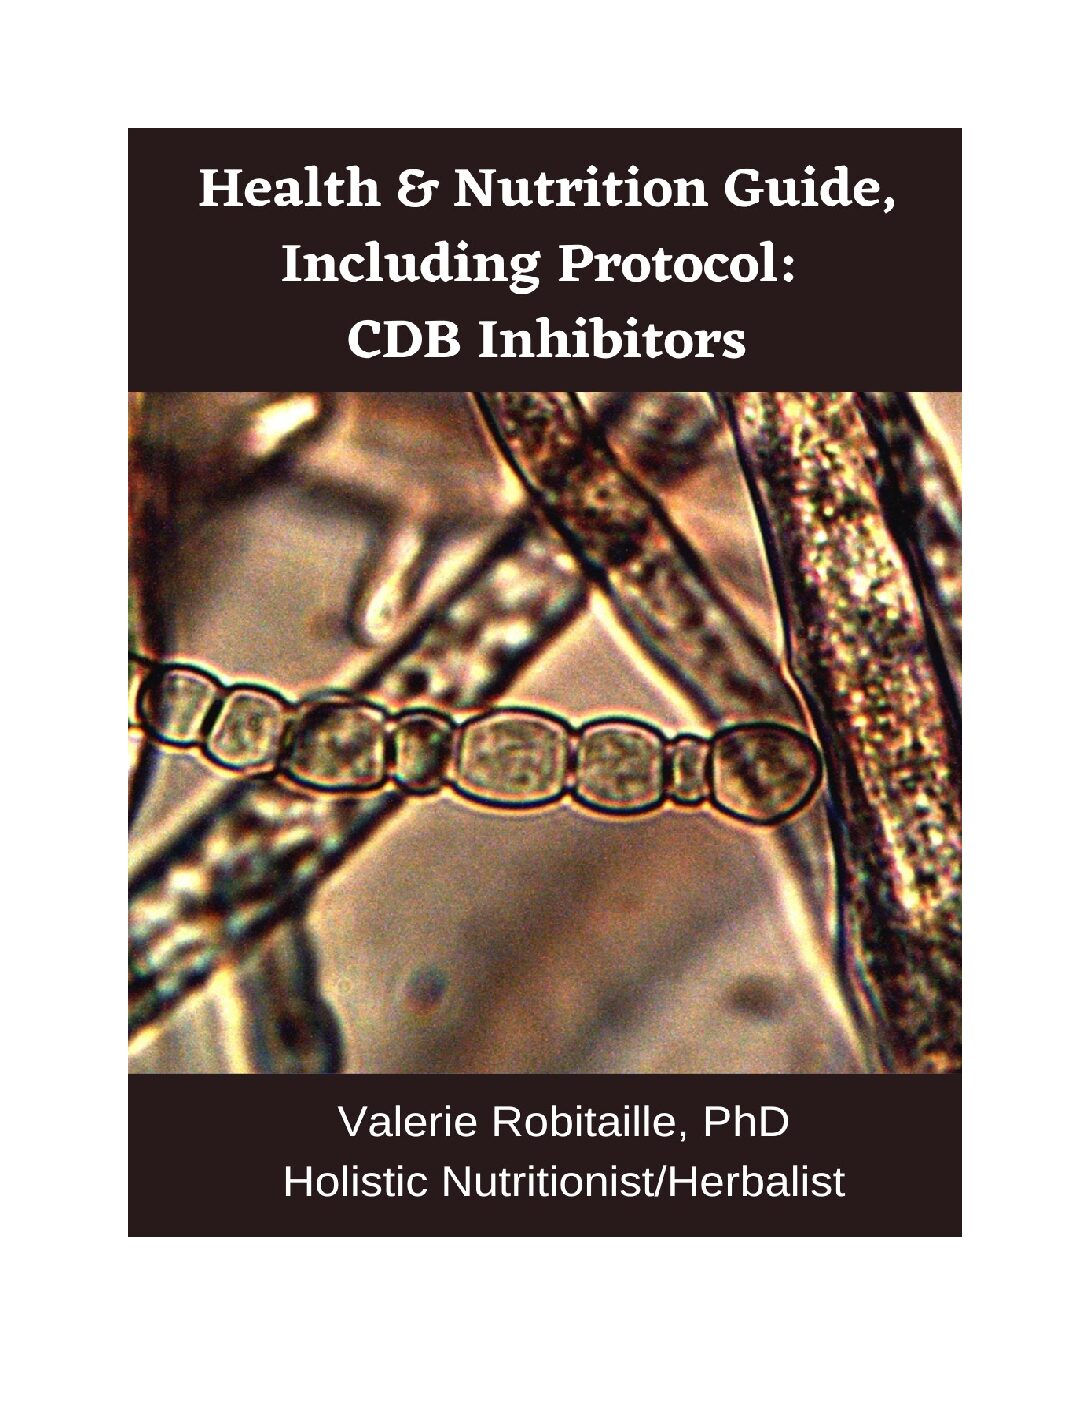 Health Guide and CDB Inhibitors Protocol 1 pdf CDB Inhibitors Special Offer!